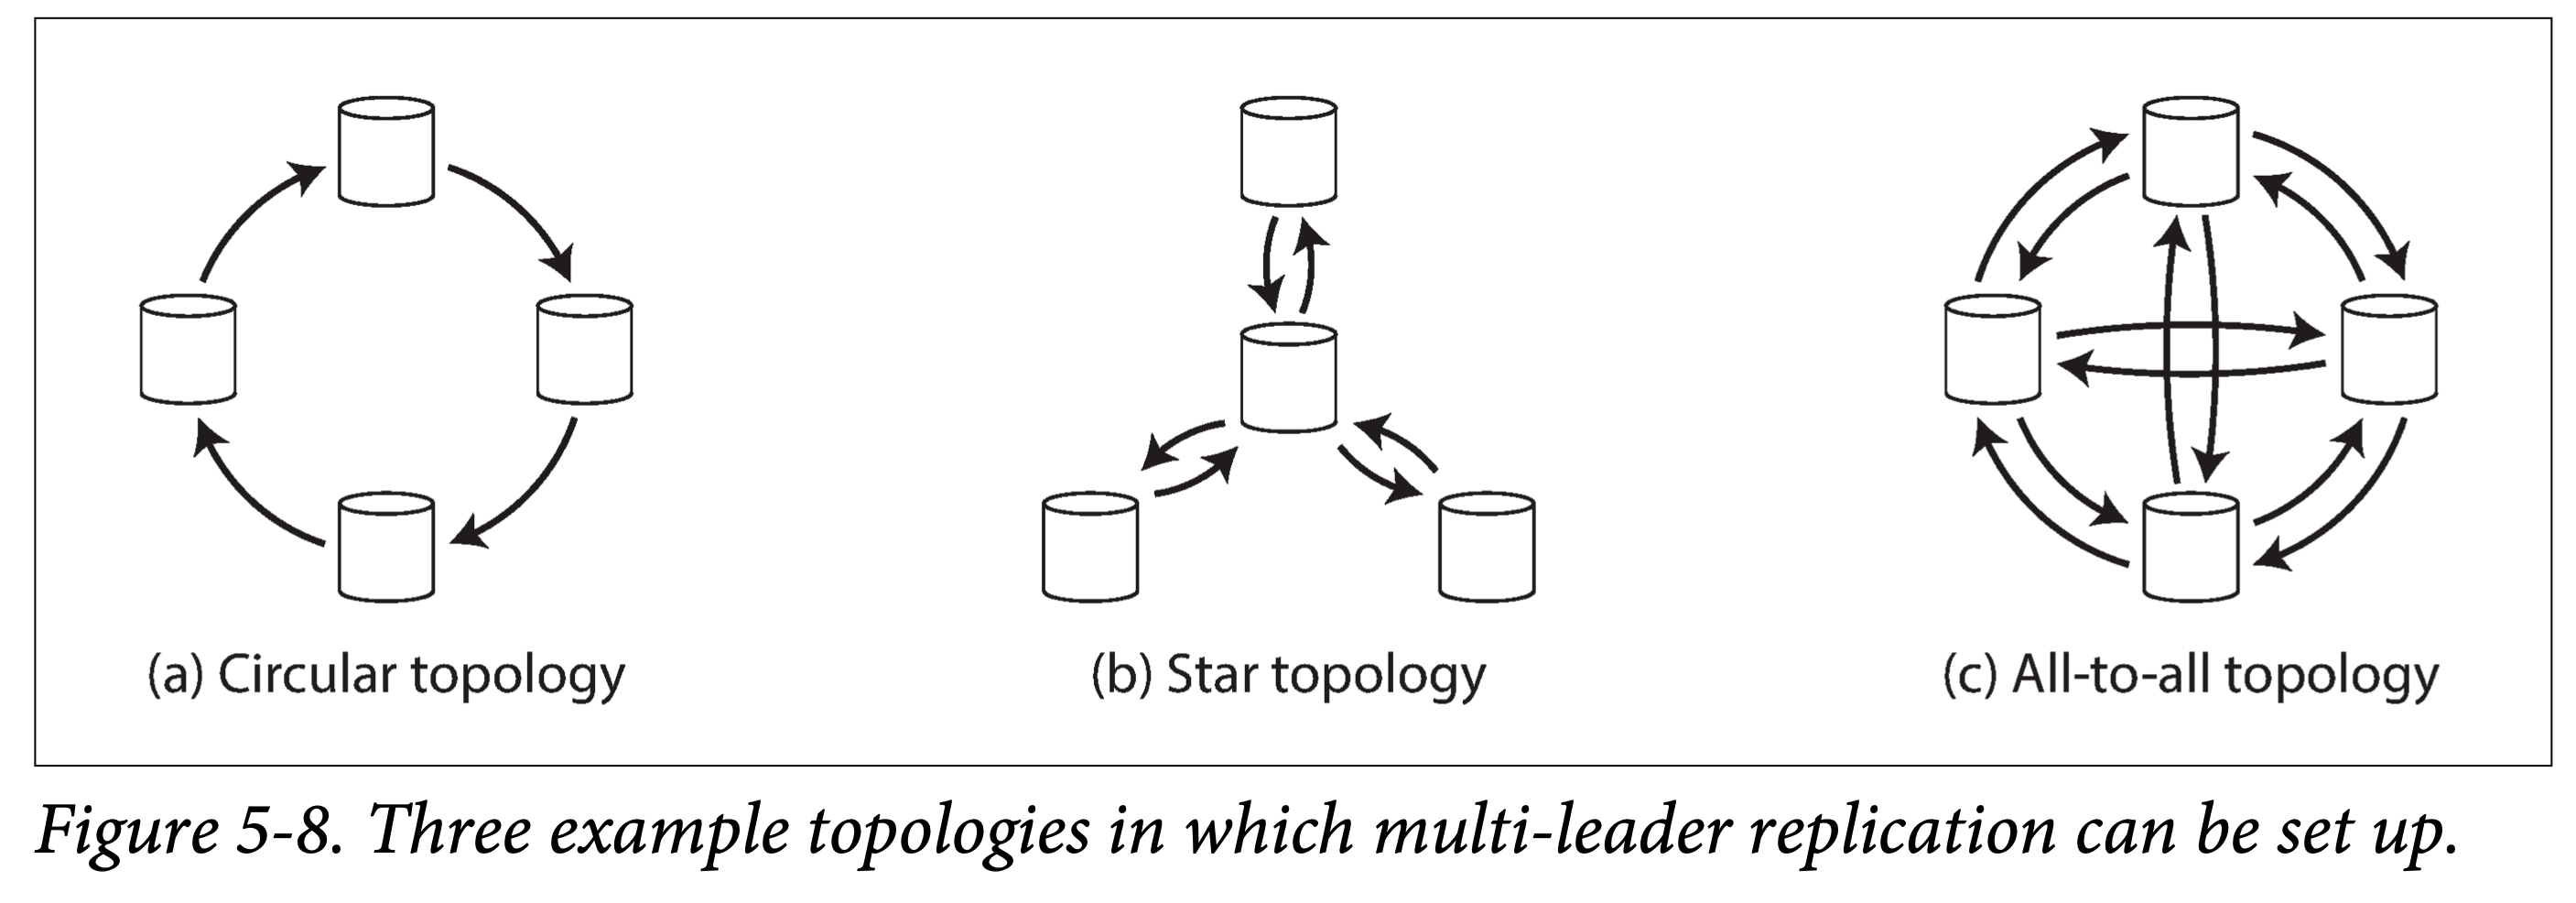 multi-leader topologies